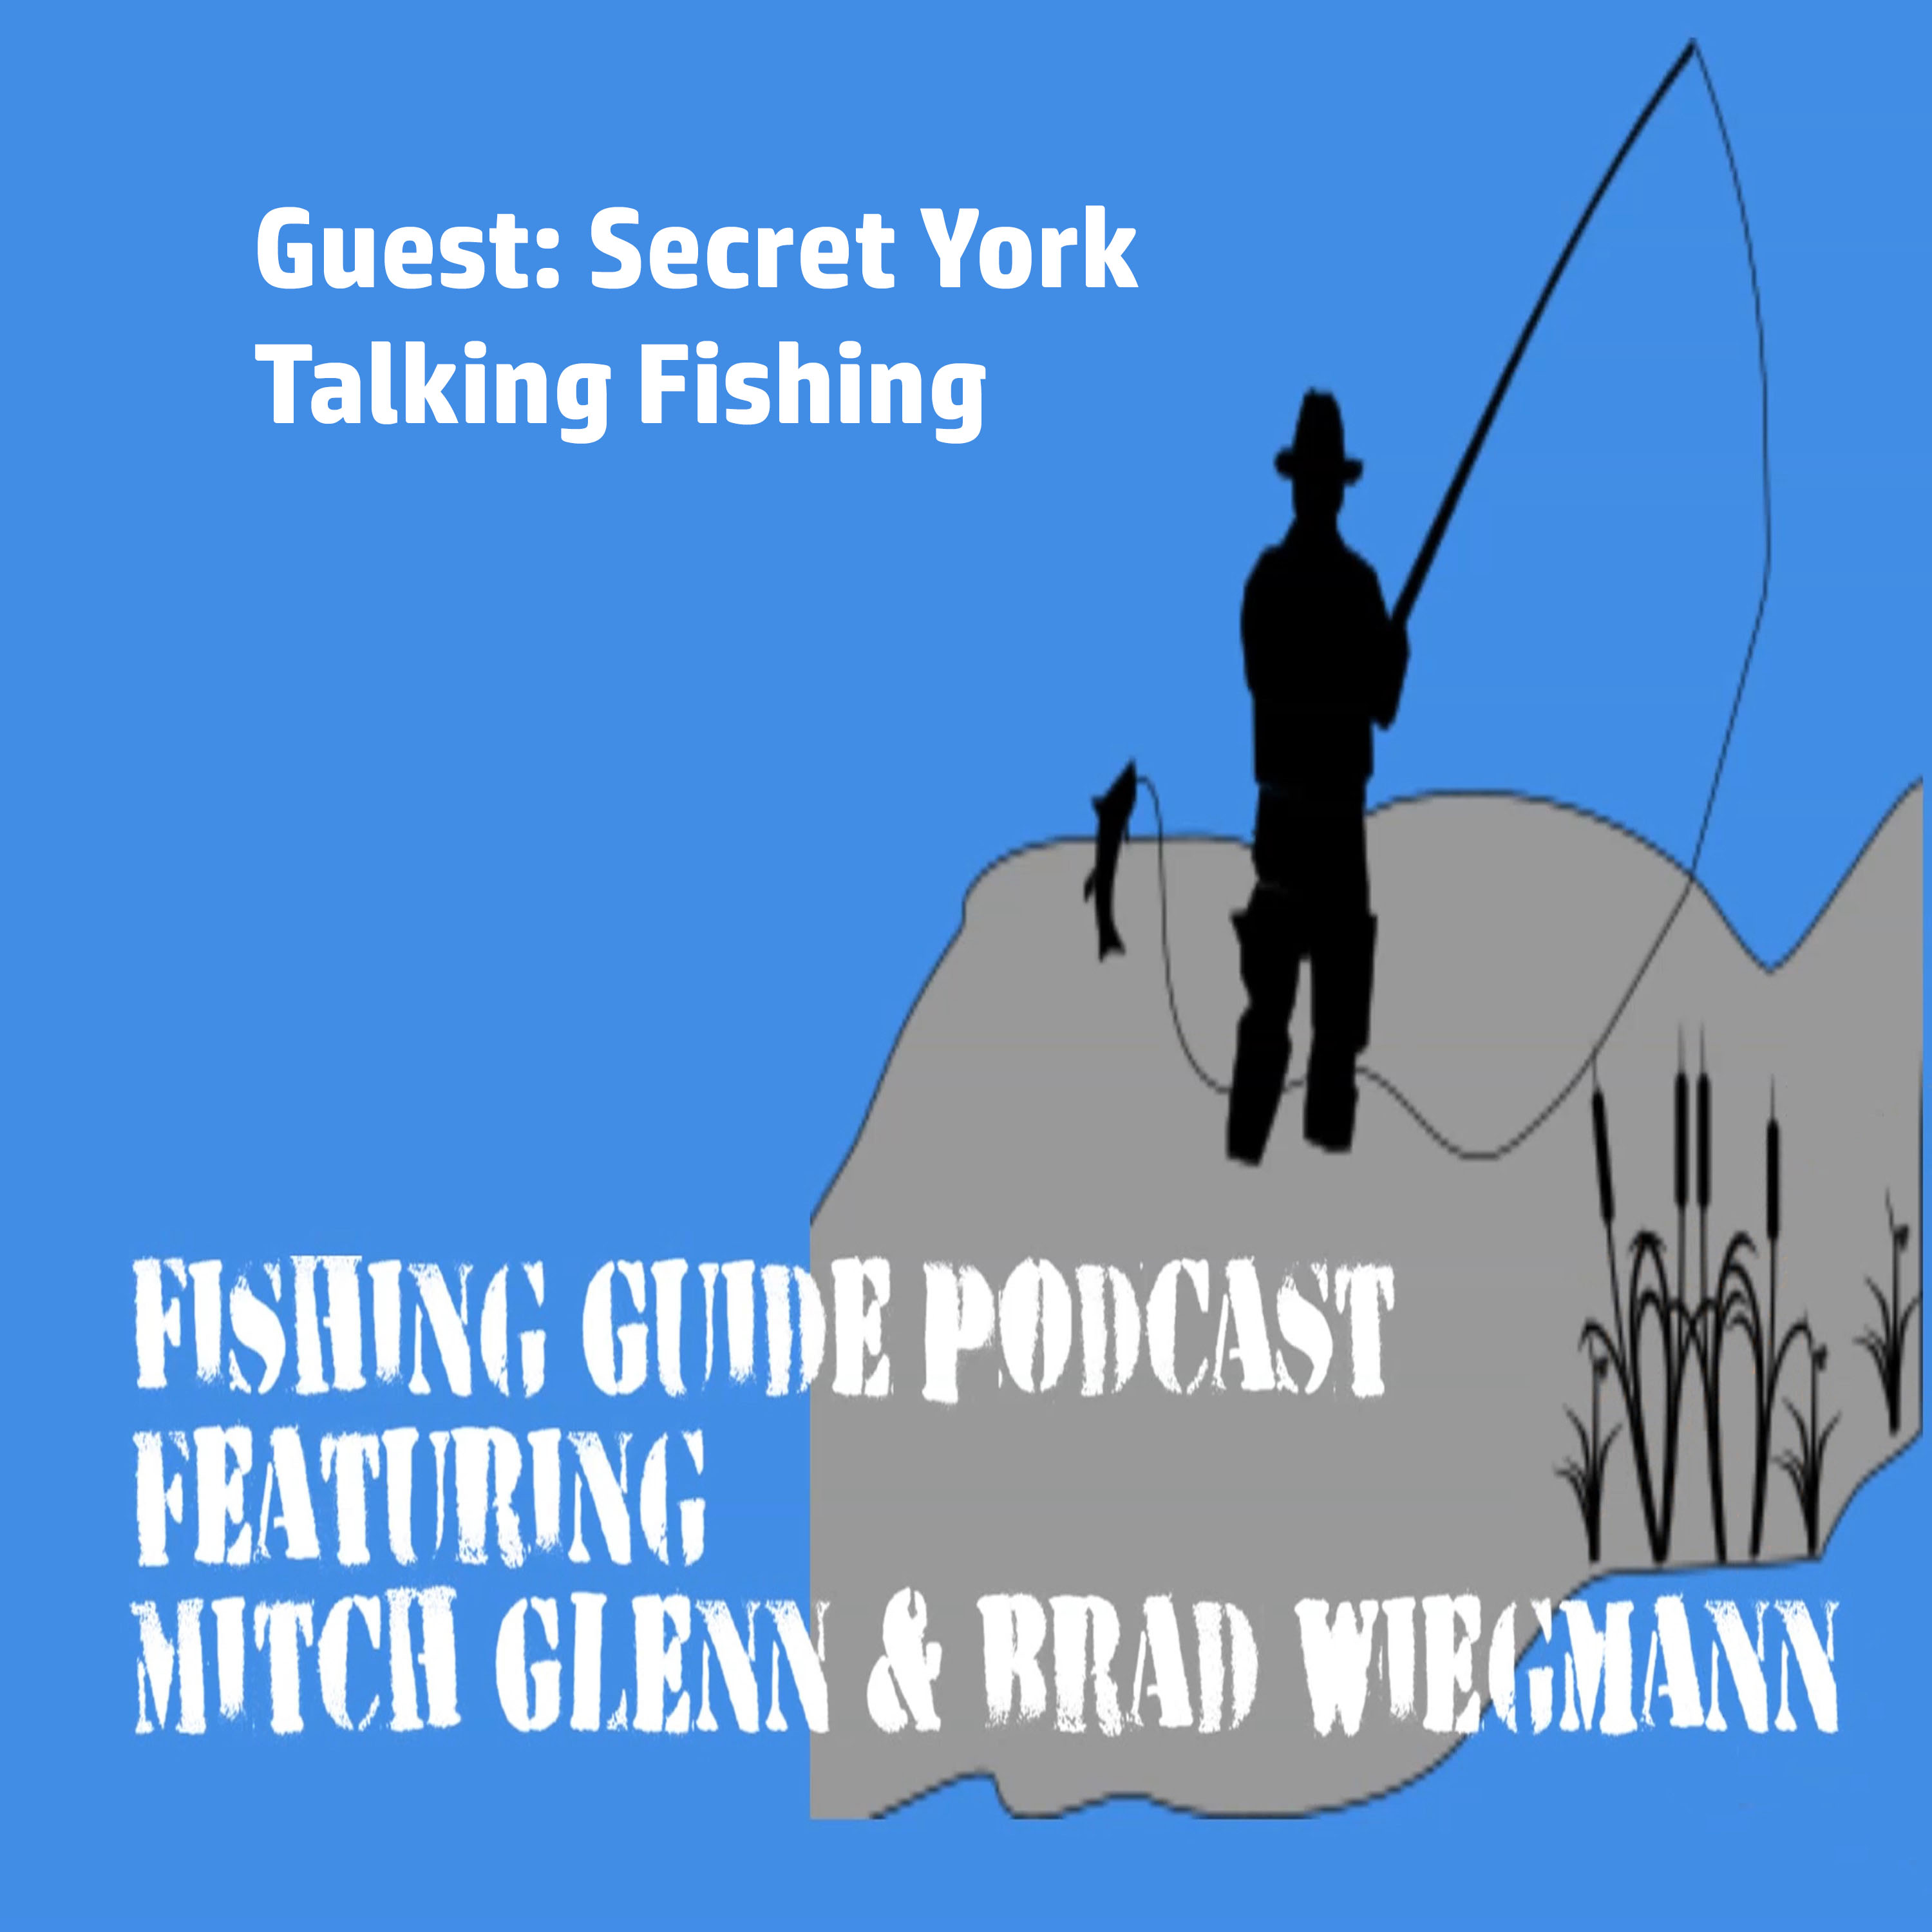 Lady Bass Anglers Association Pro Angler Secret York talks fishing: Episode 3